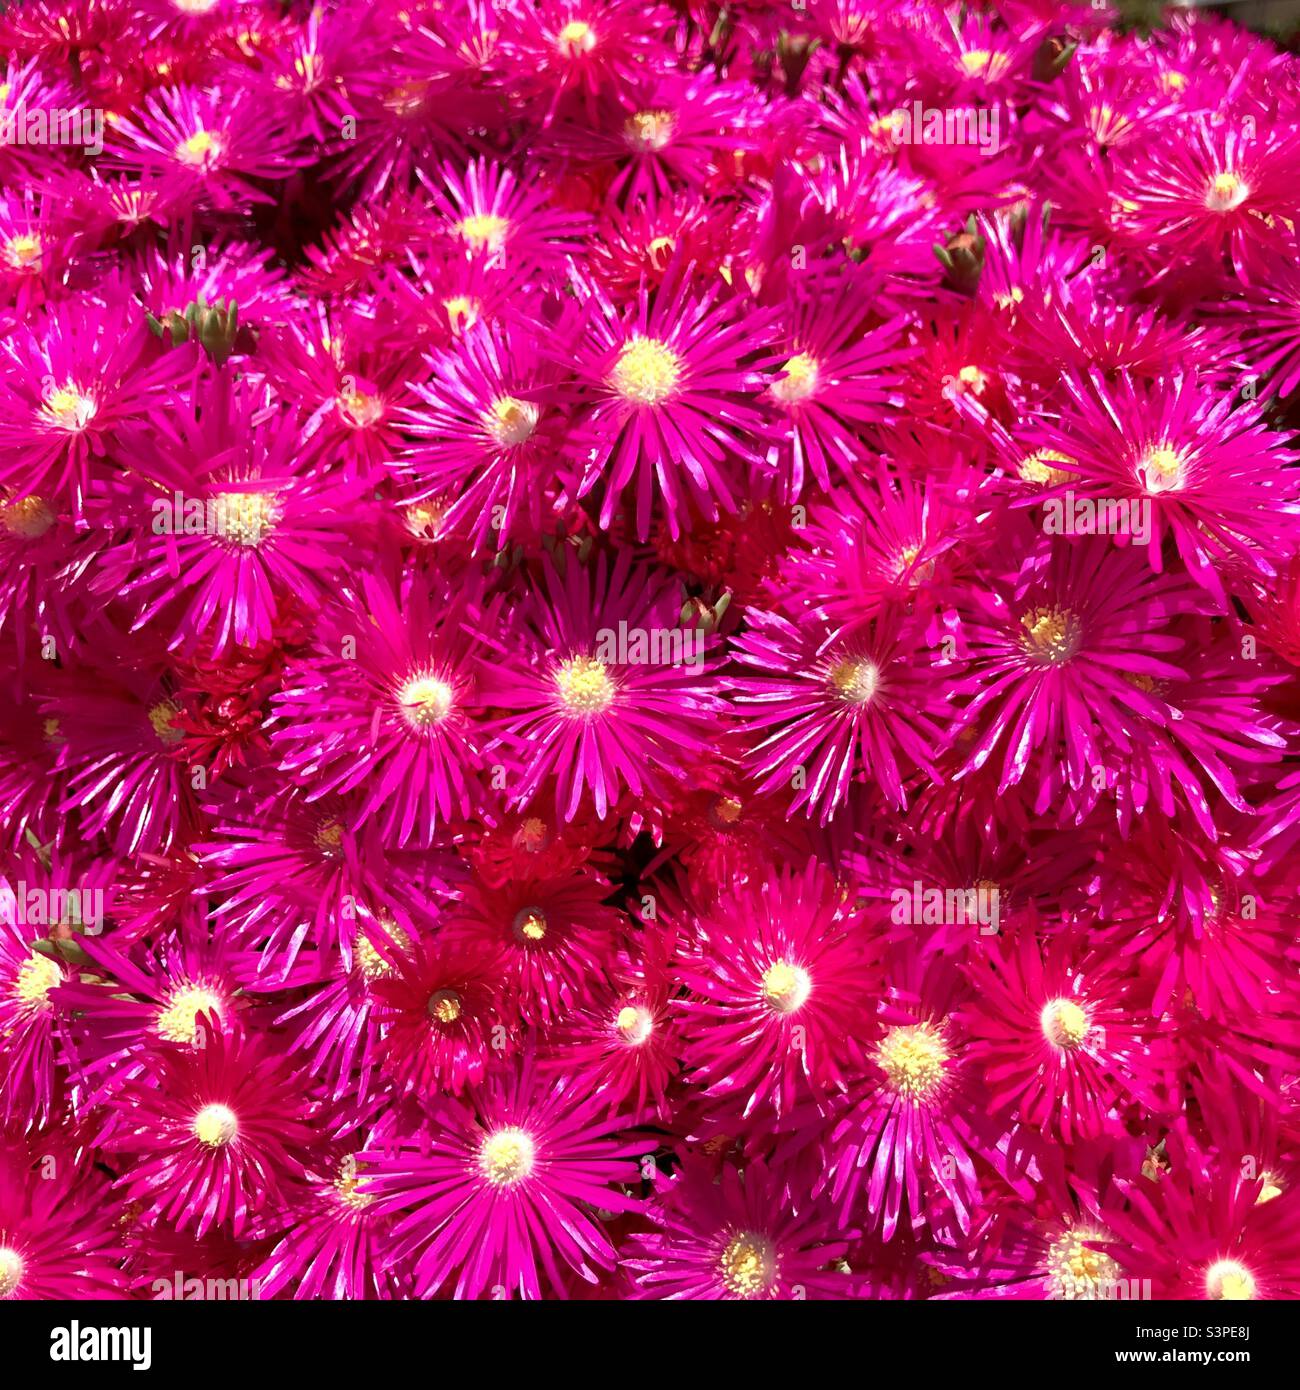 Vibrant fuschia flowers. Stock Photo